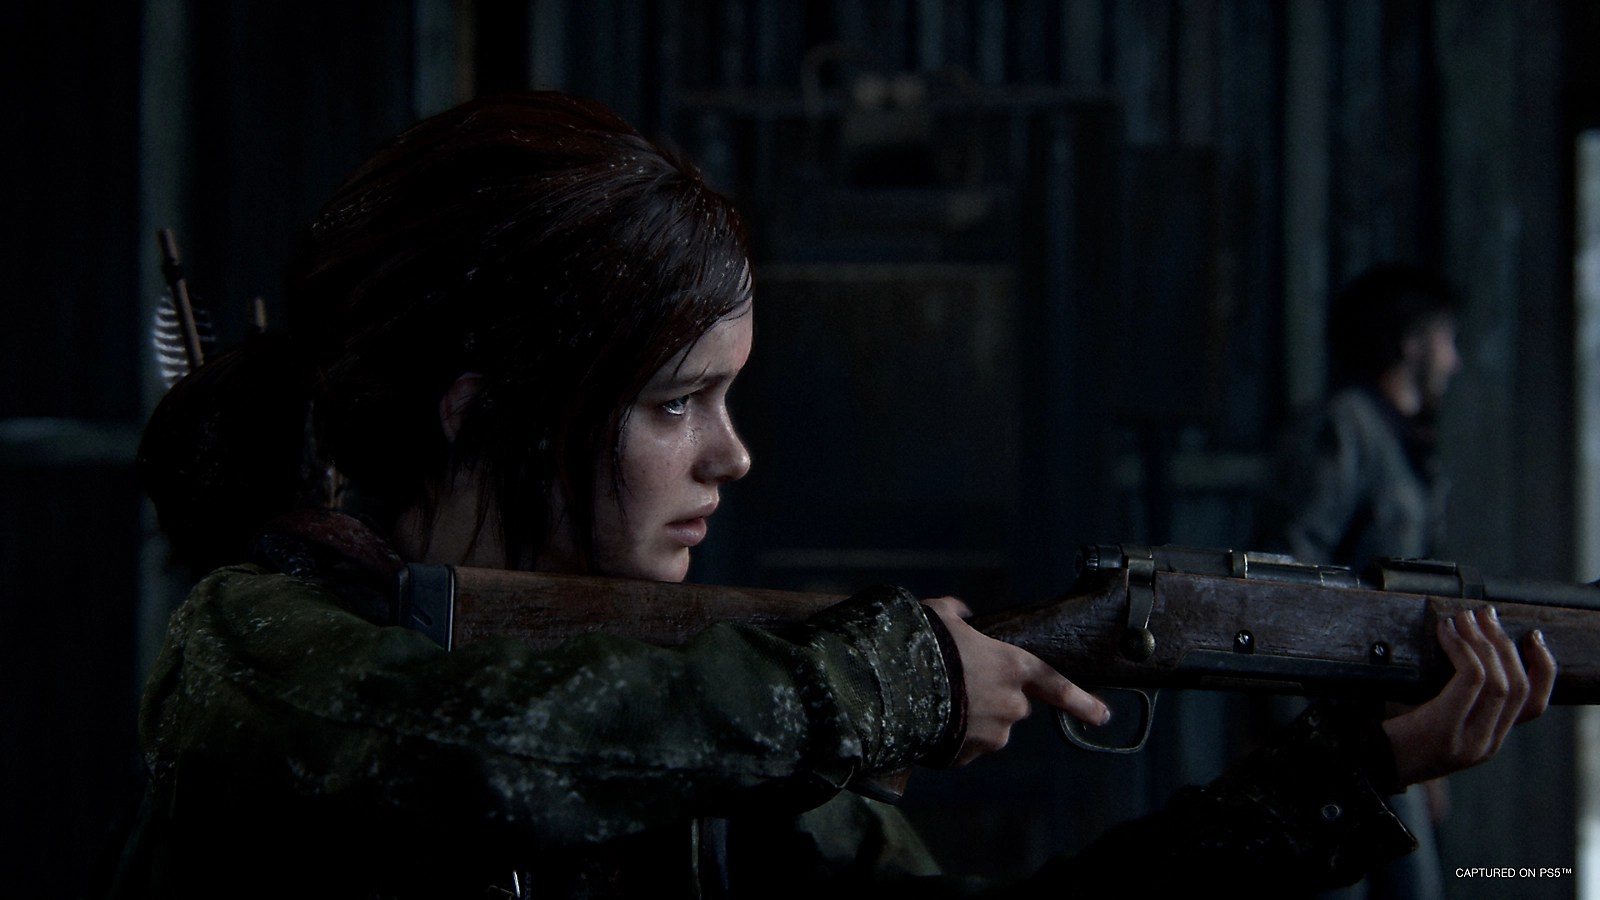 The Last of Us Part II DLC isn't Happening, According to Neil Druckmann